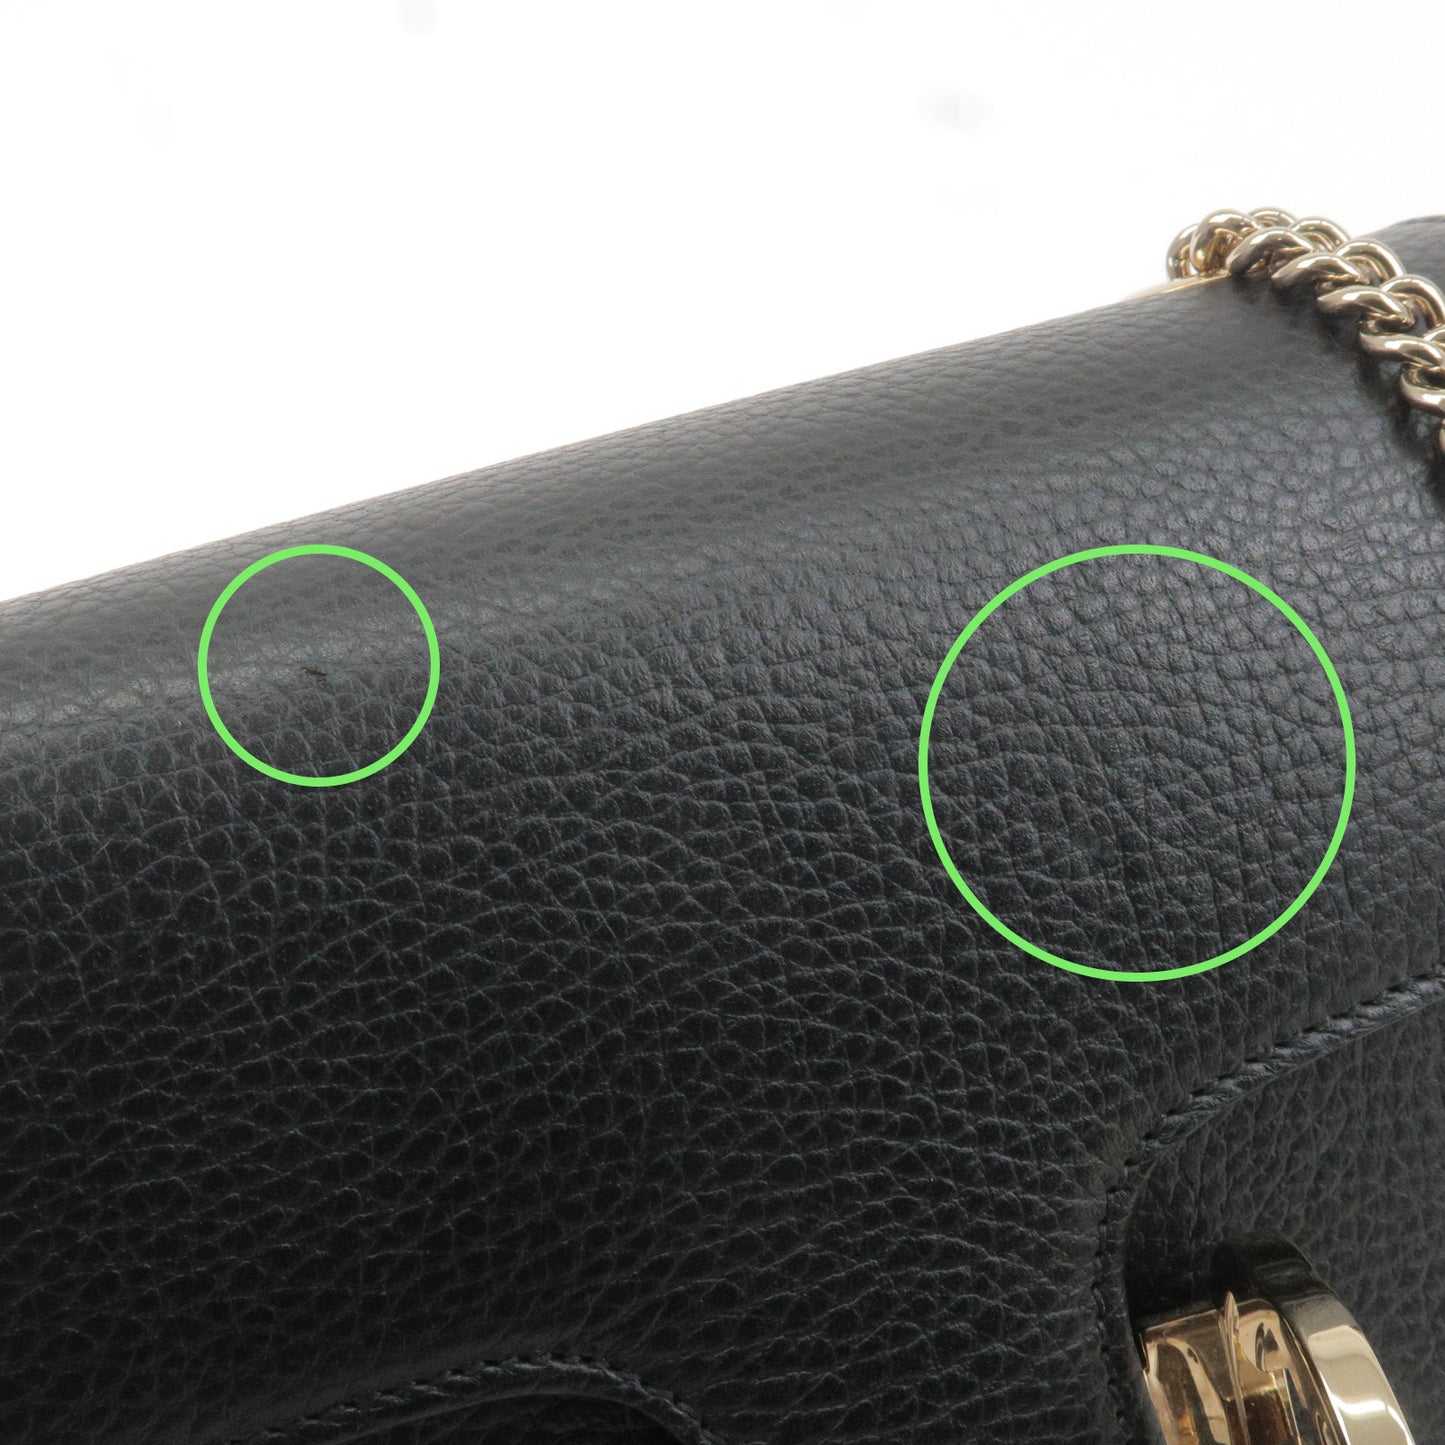 GUCCI Interlocking G Leather Chain Shoulder Bag Black 510304